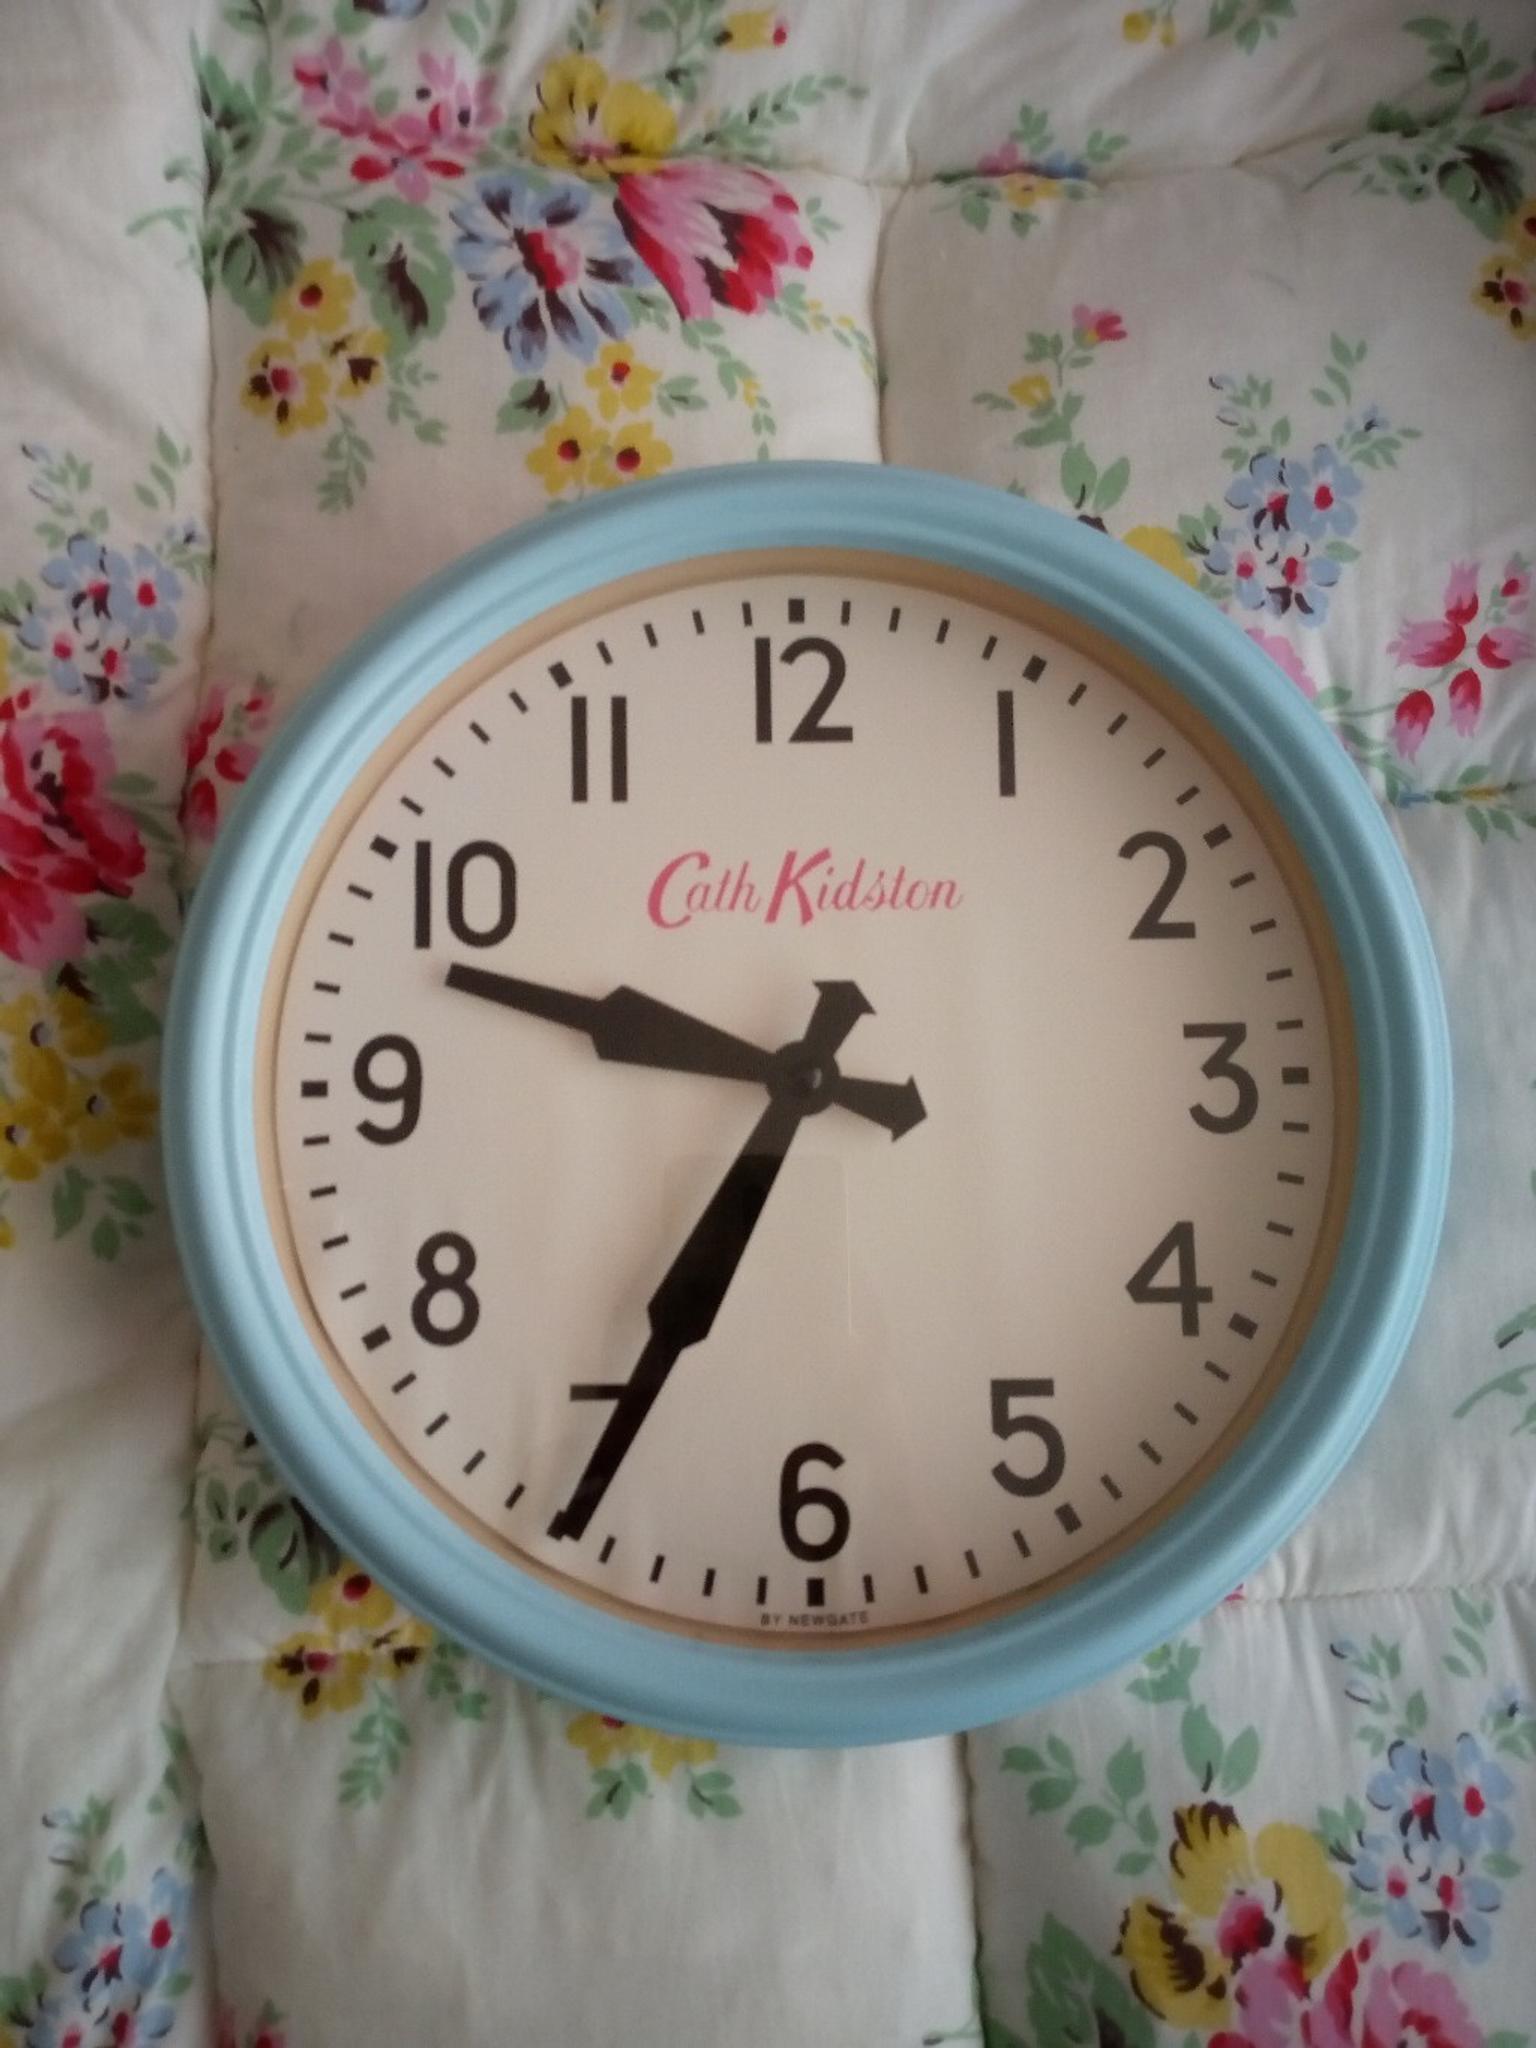 Cath kidston clock in Wakefield for £30 